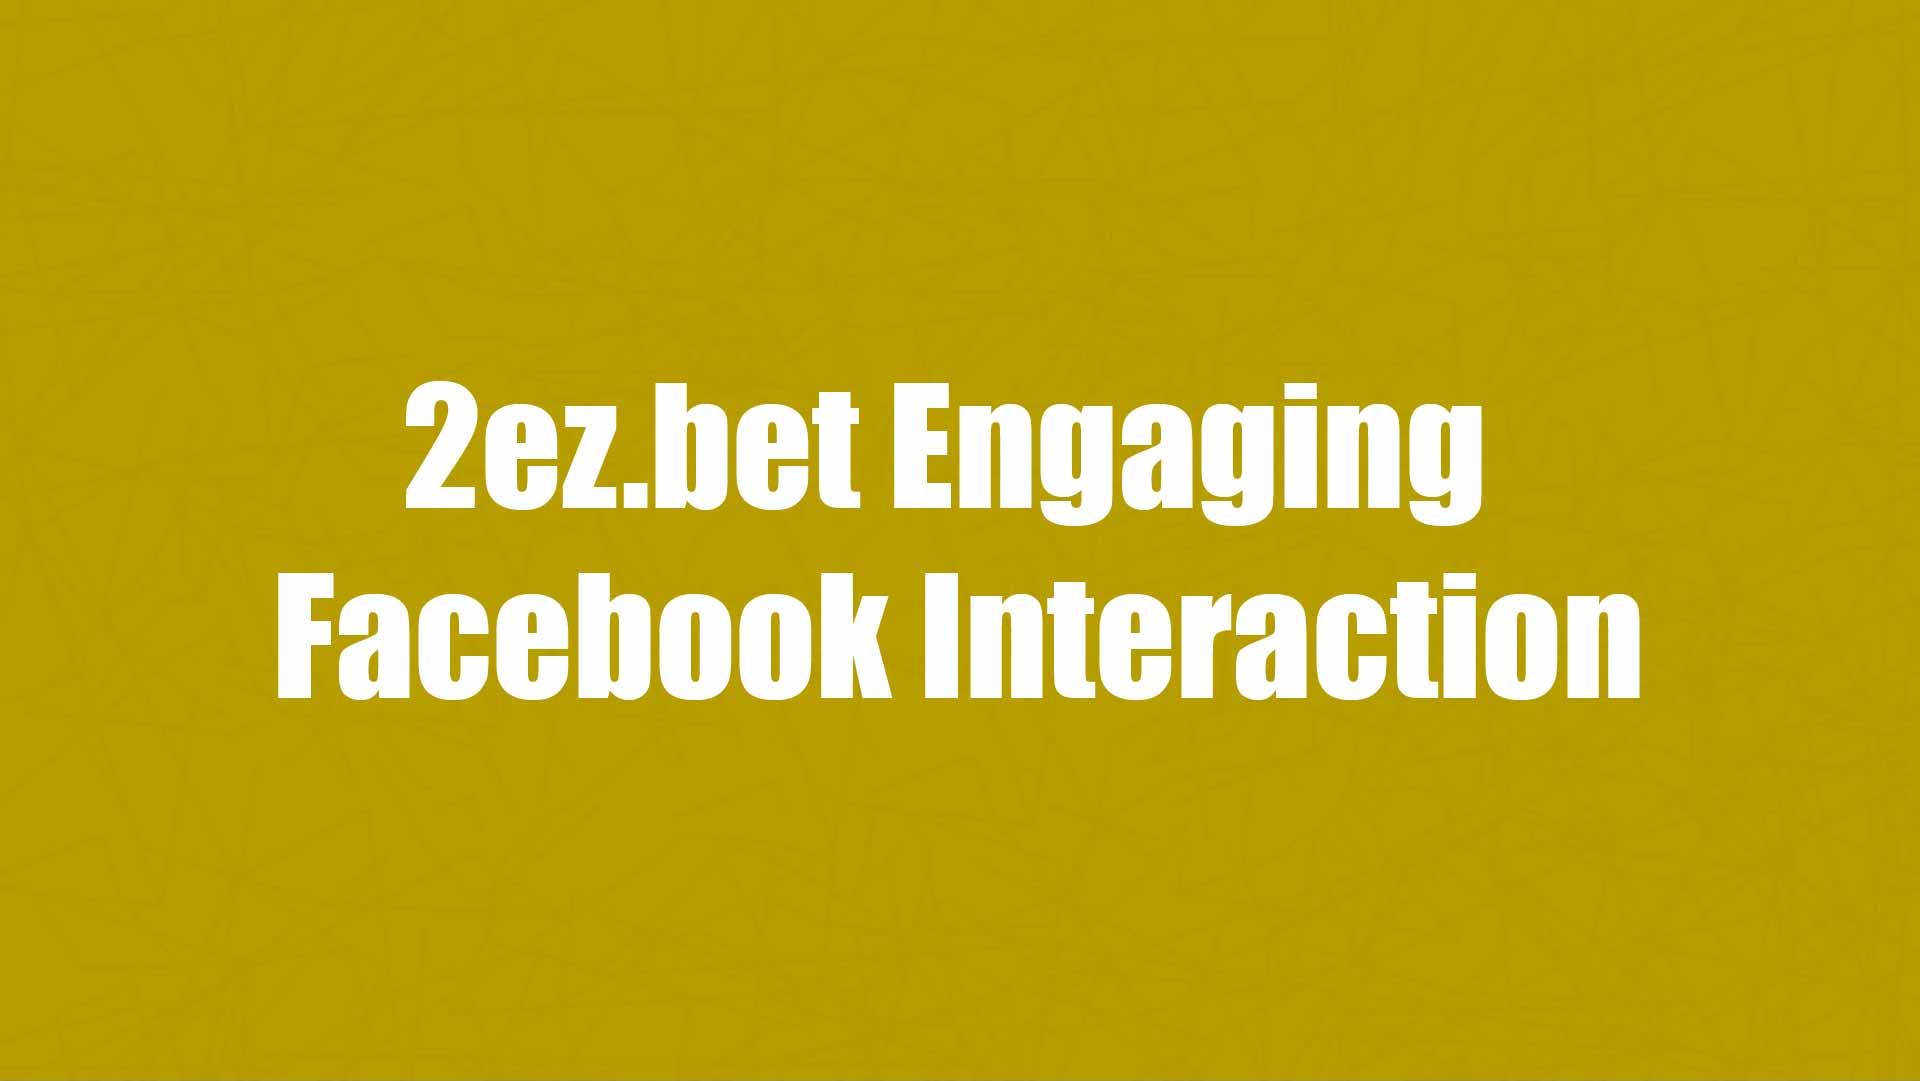 1_2ez.bet Engaging -Facebook Interaction